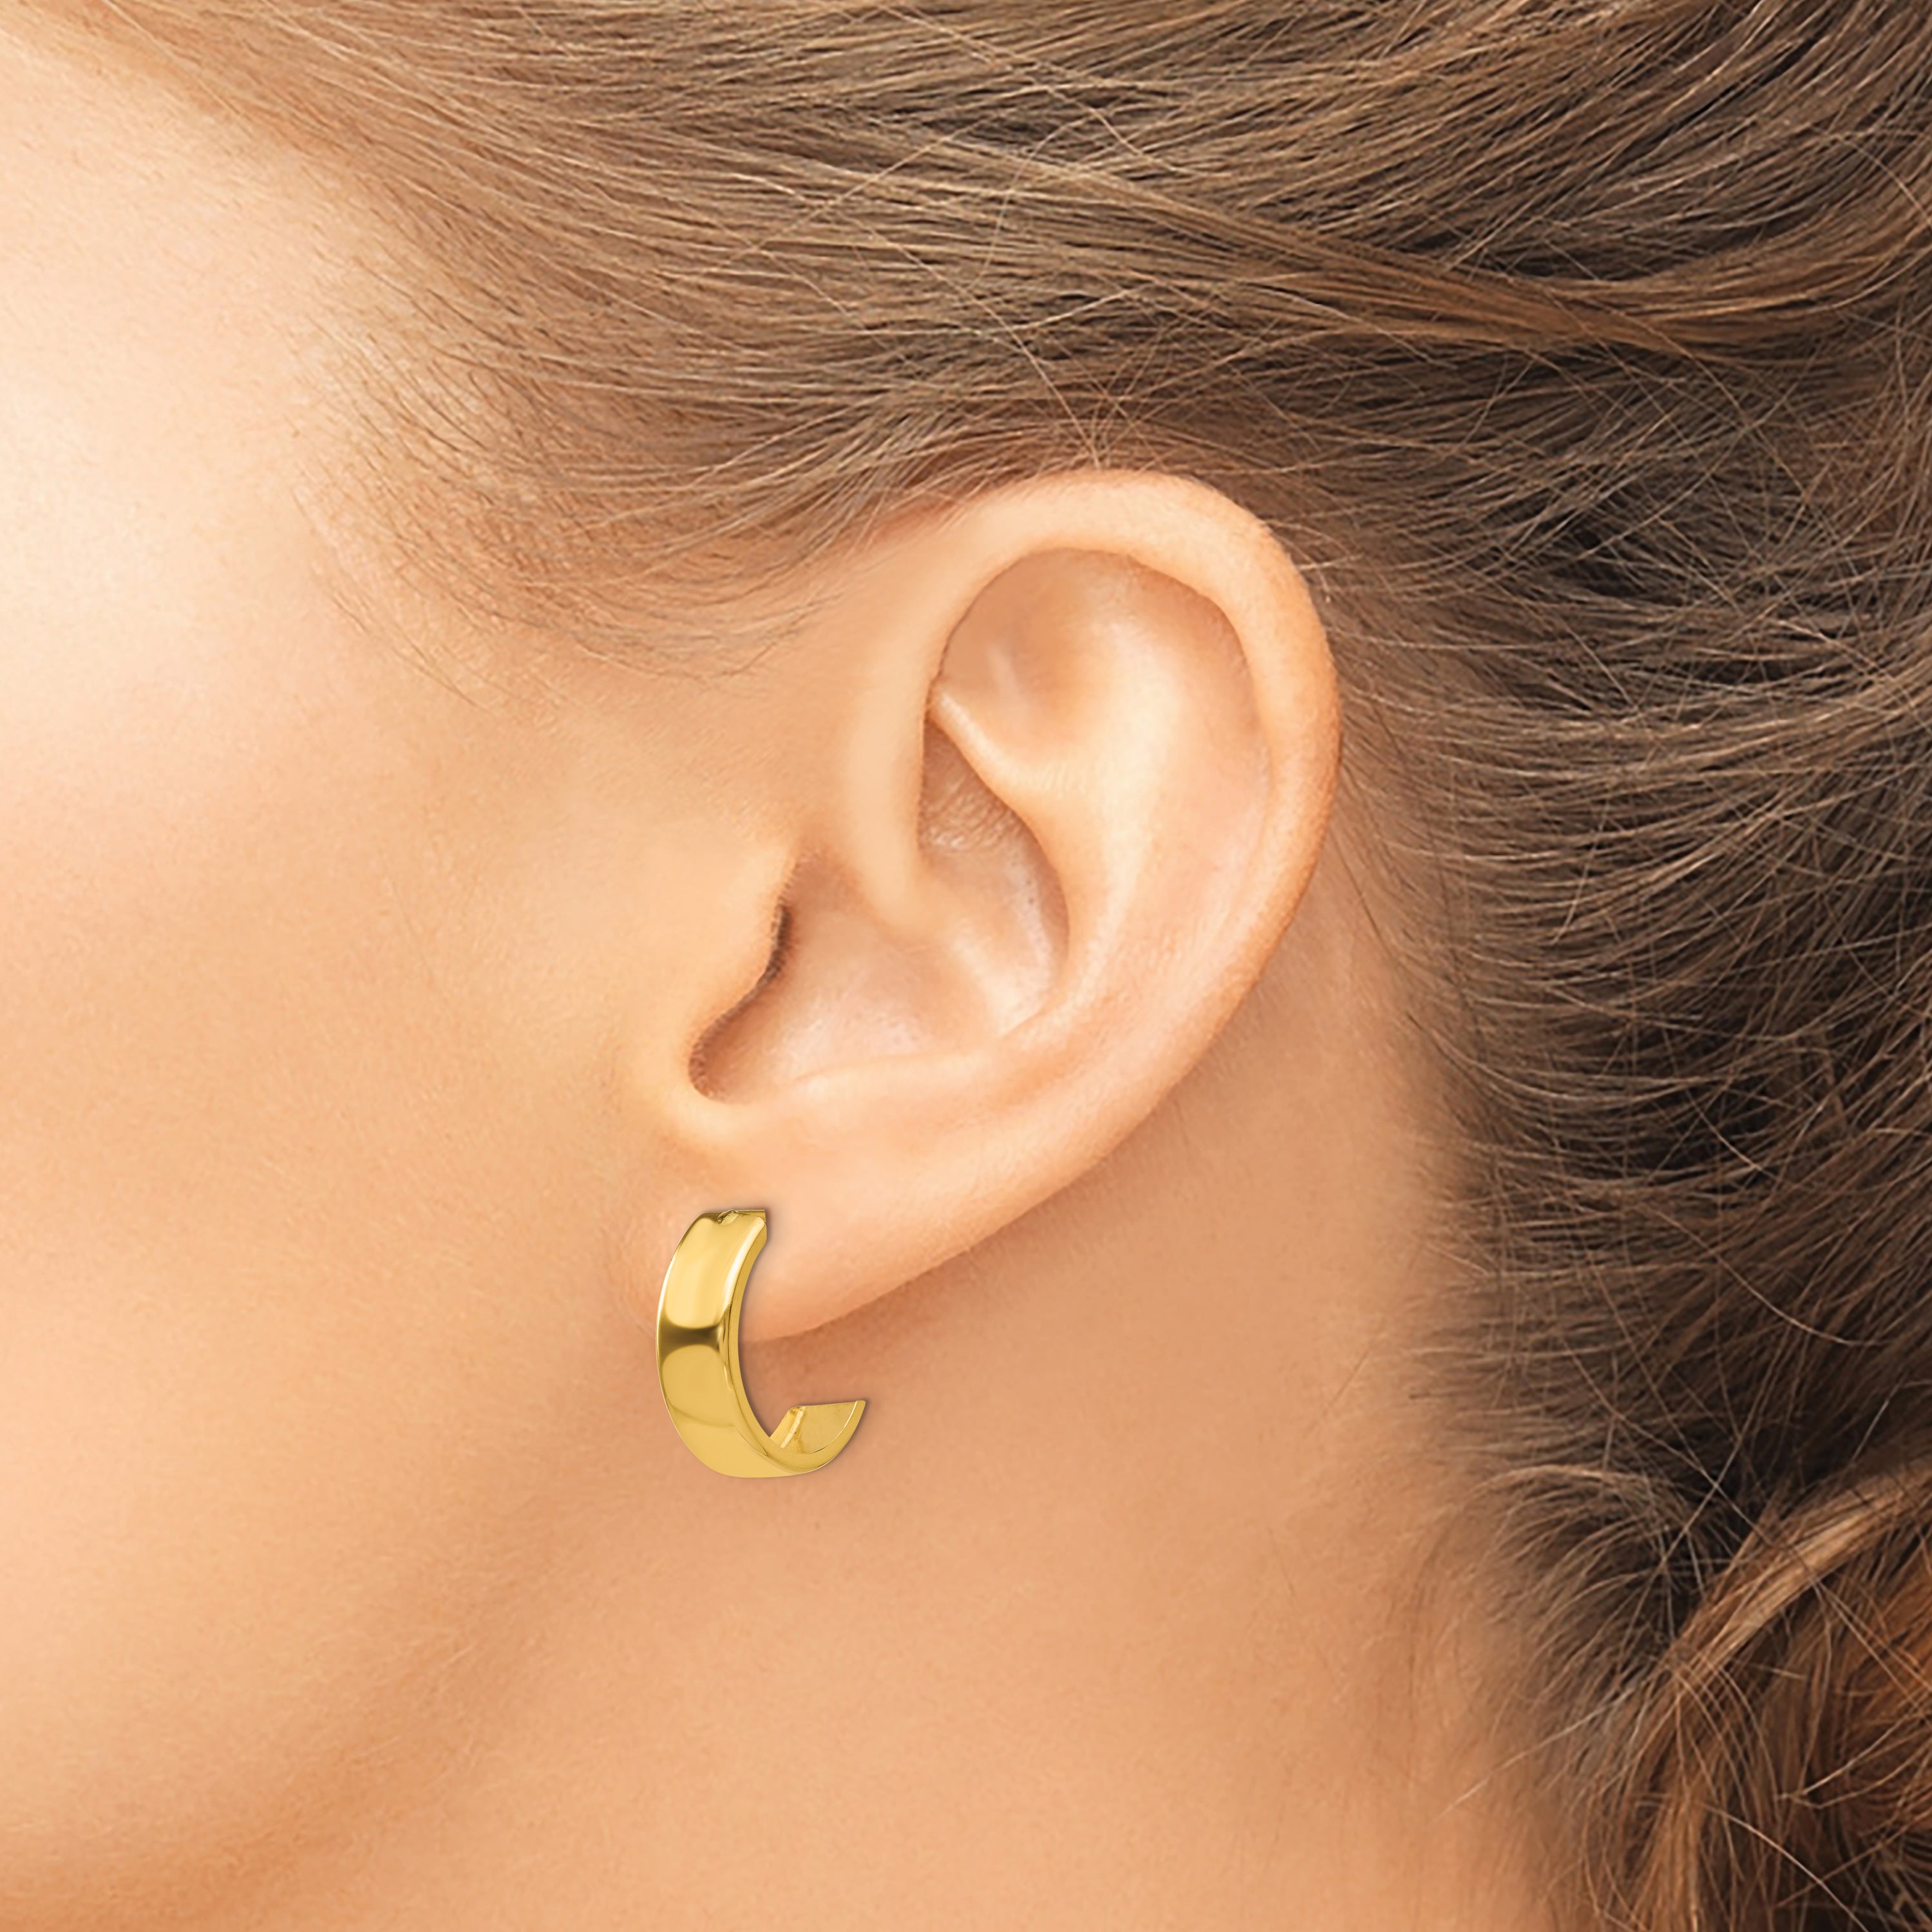 10k White Gold Diamond-cut 3mm Round Hoop Earrings